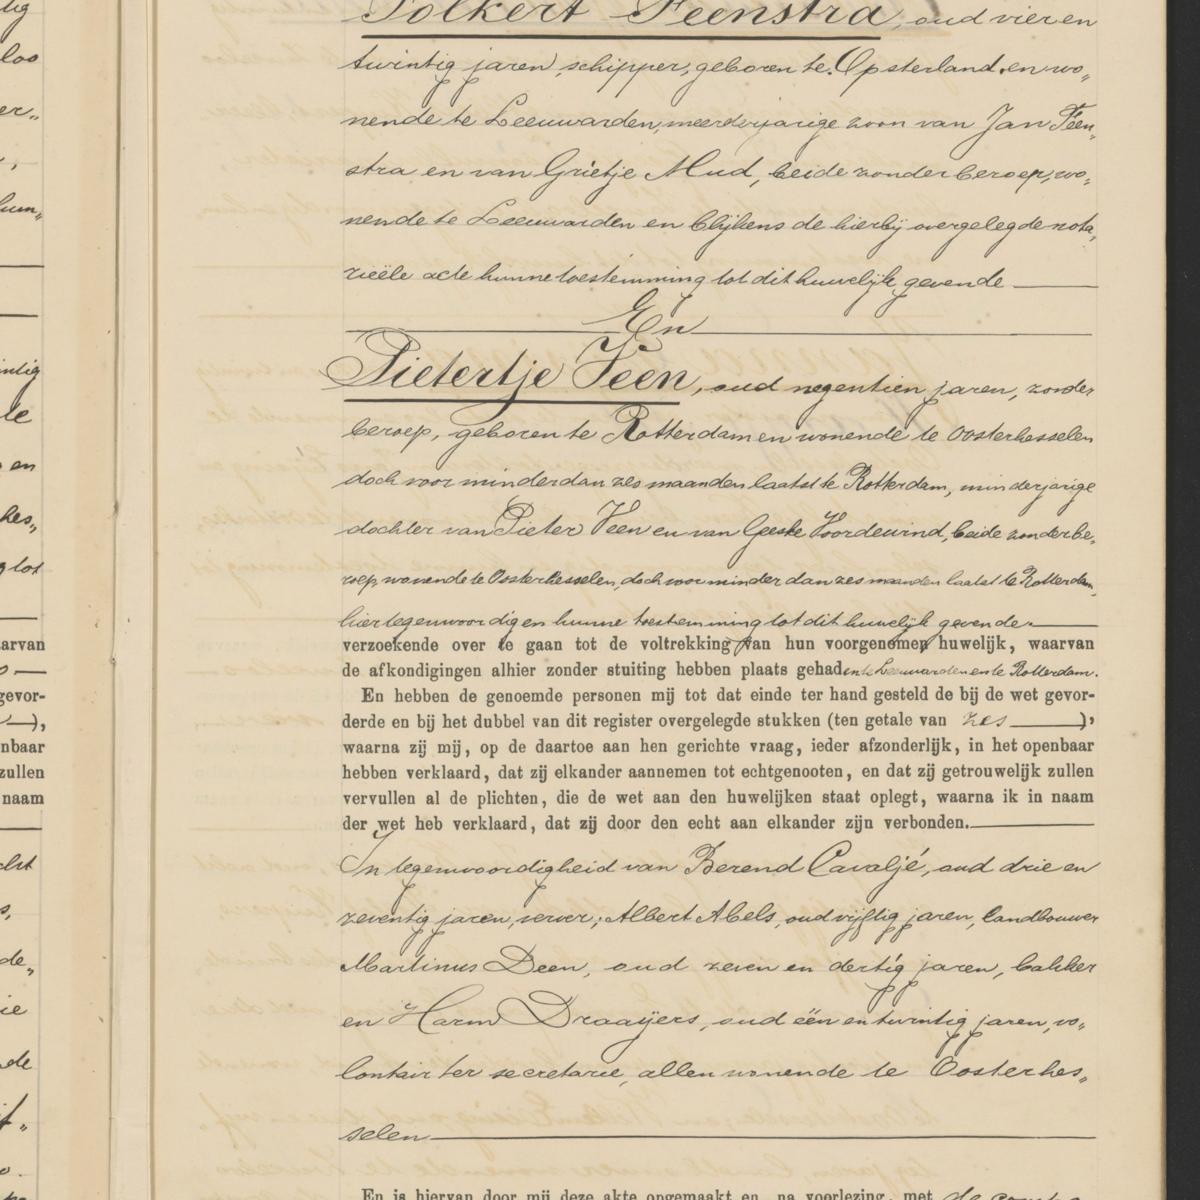 Civil registry of marriages, Oosterhesselen, 1906, record 12